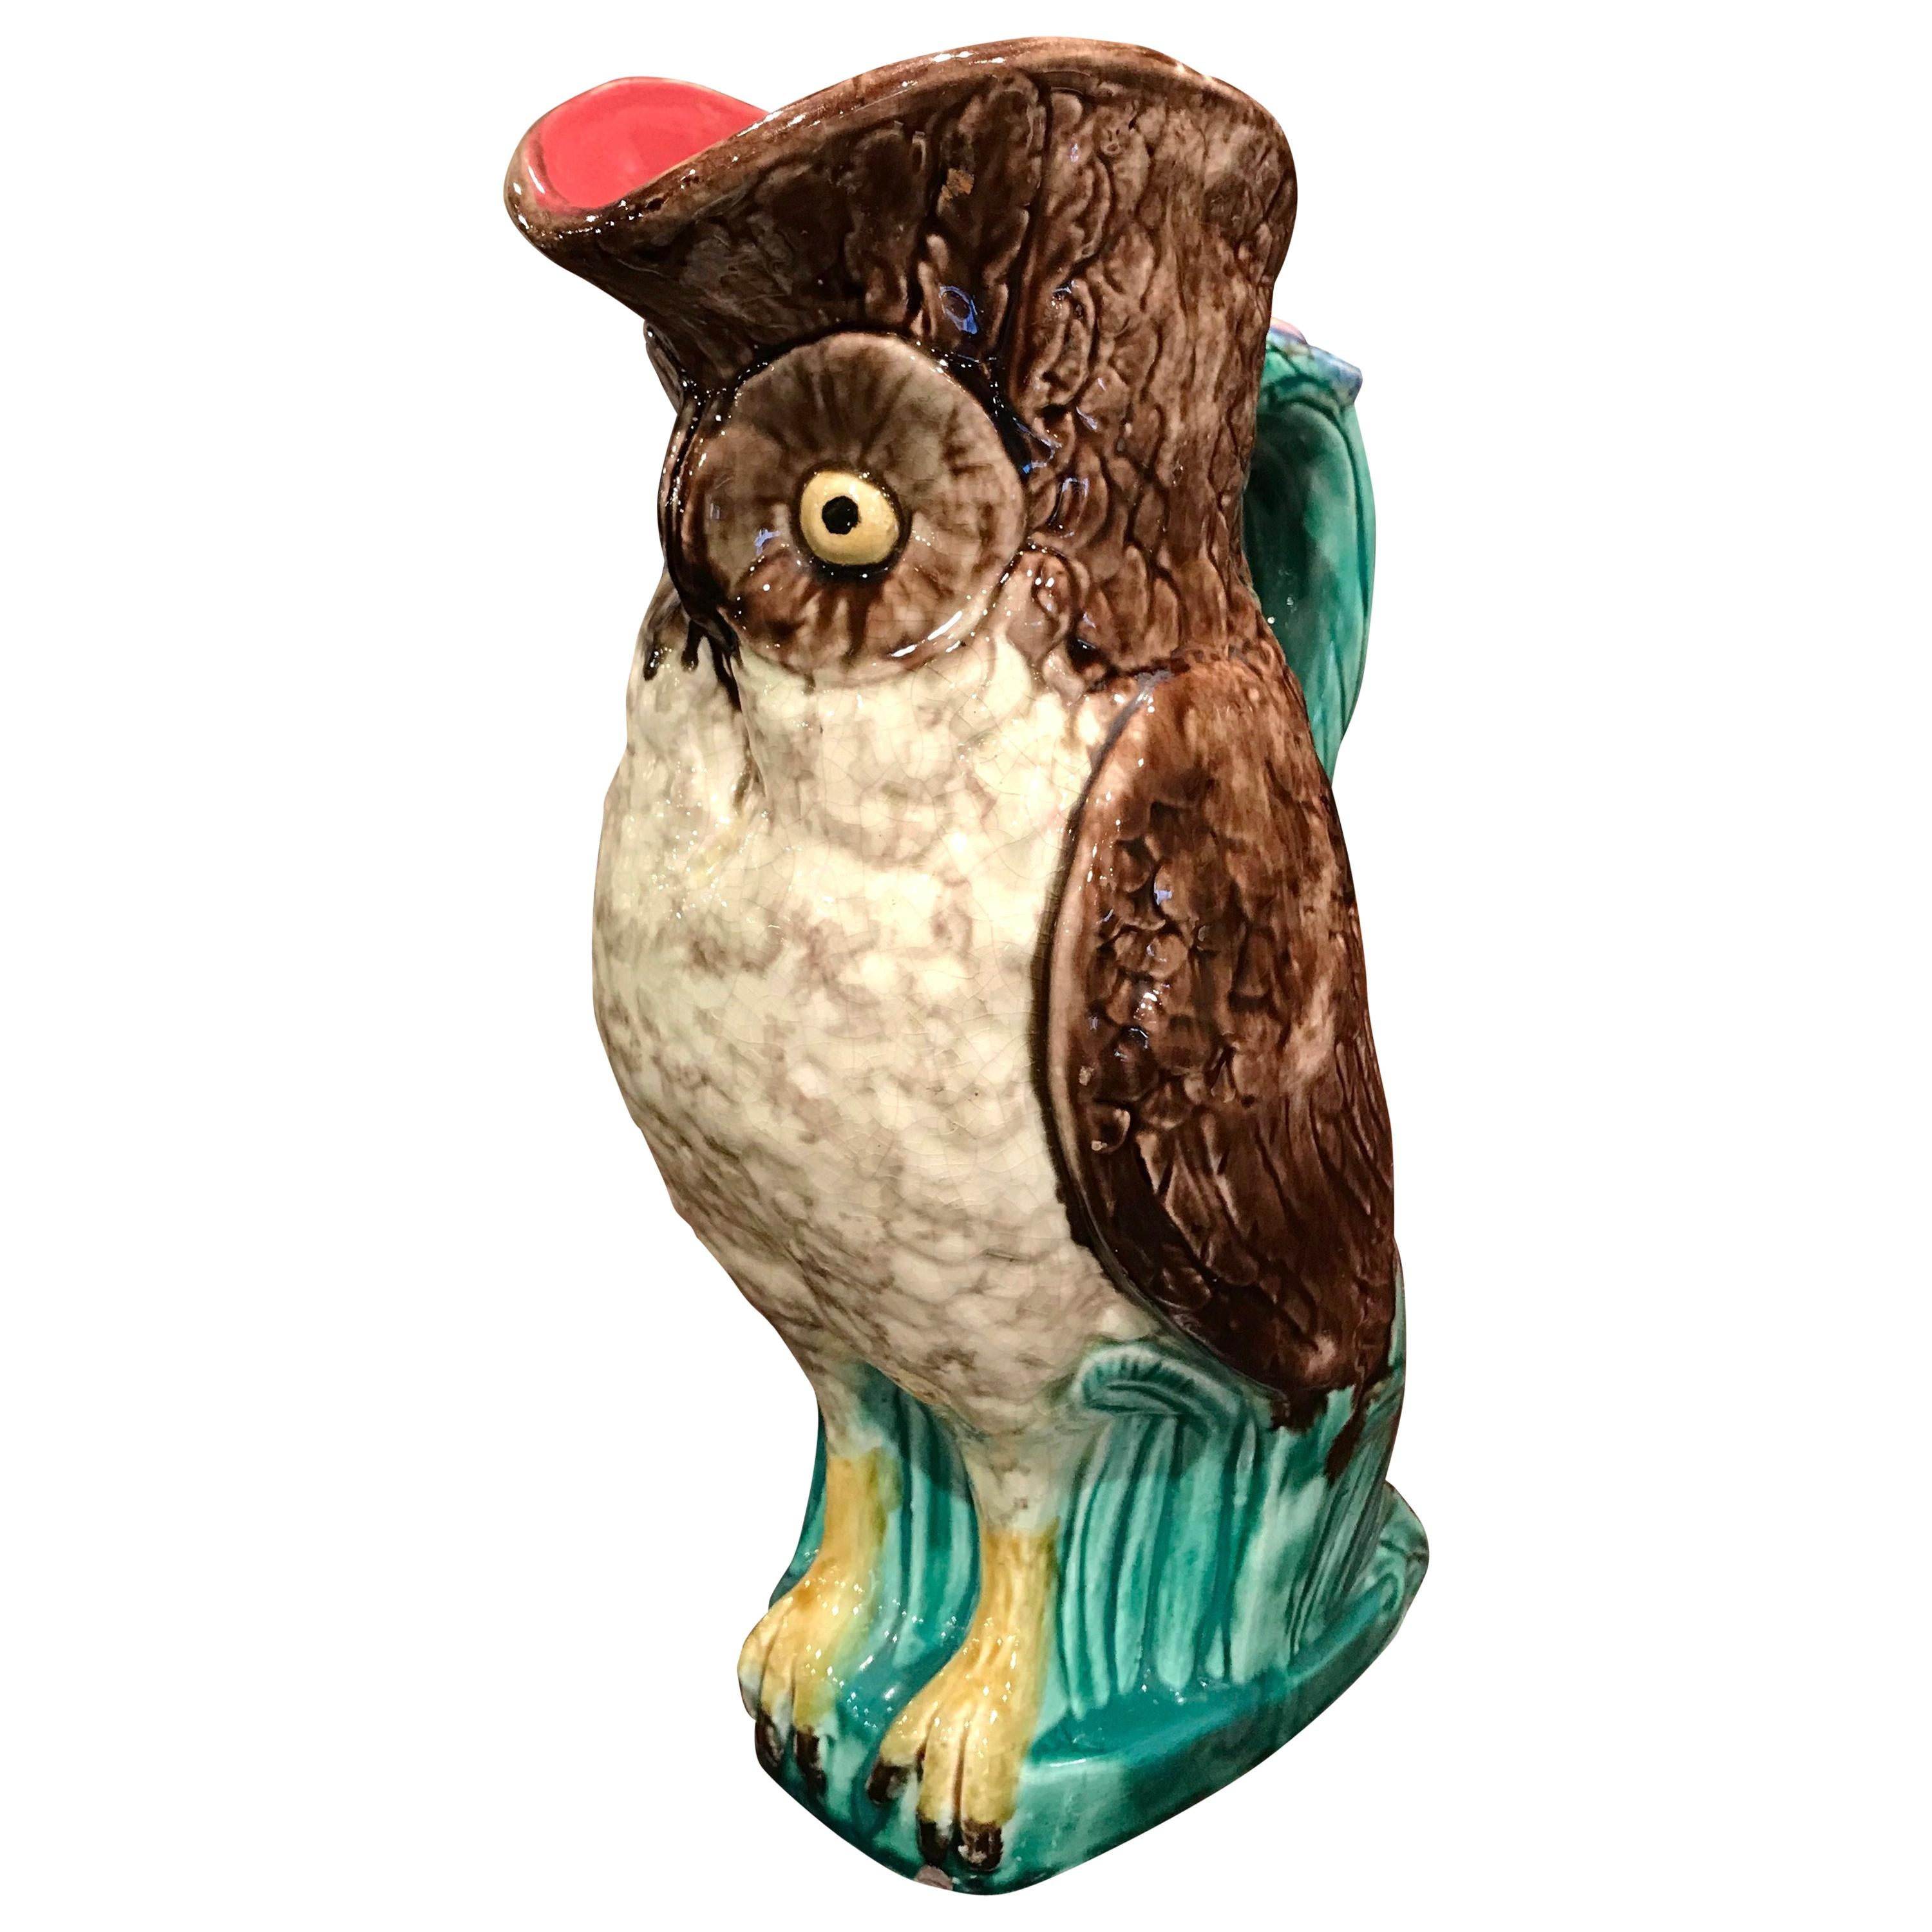 19th Century Belgium Painted Ceramic Barbotine Owl Pitcher from Nimy-Les-Mons